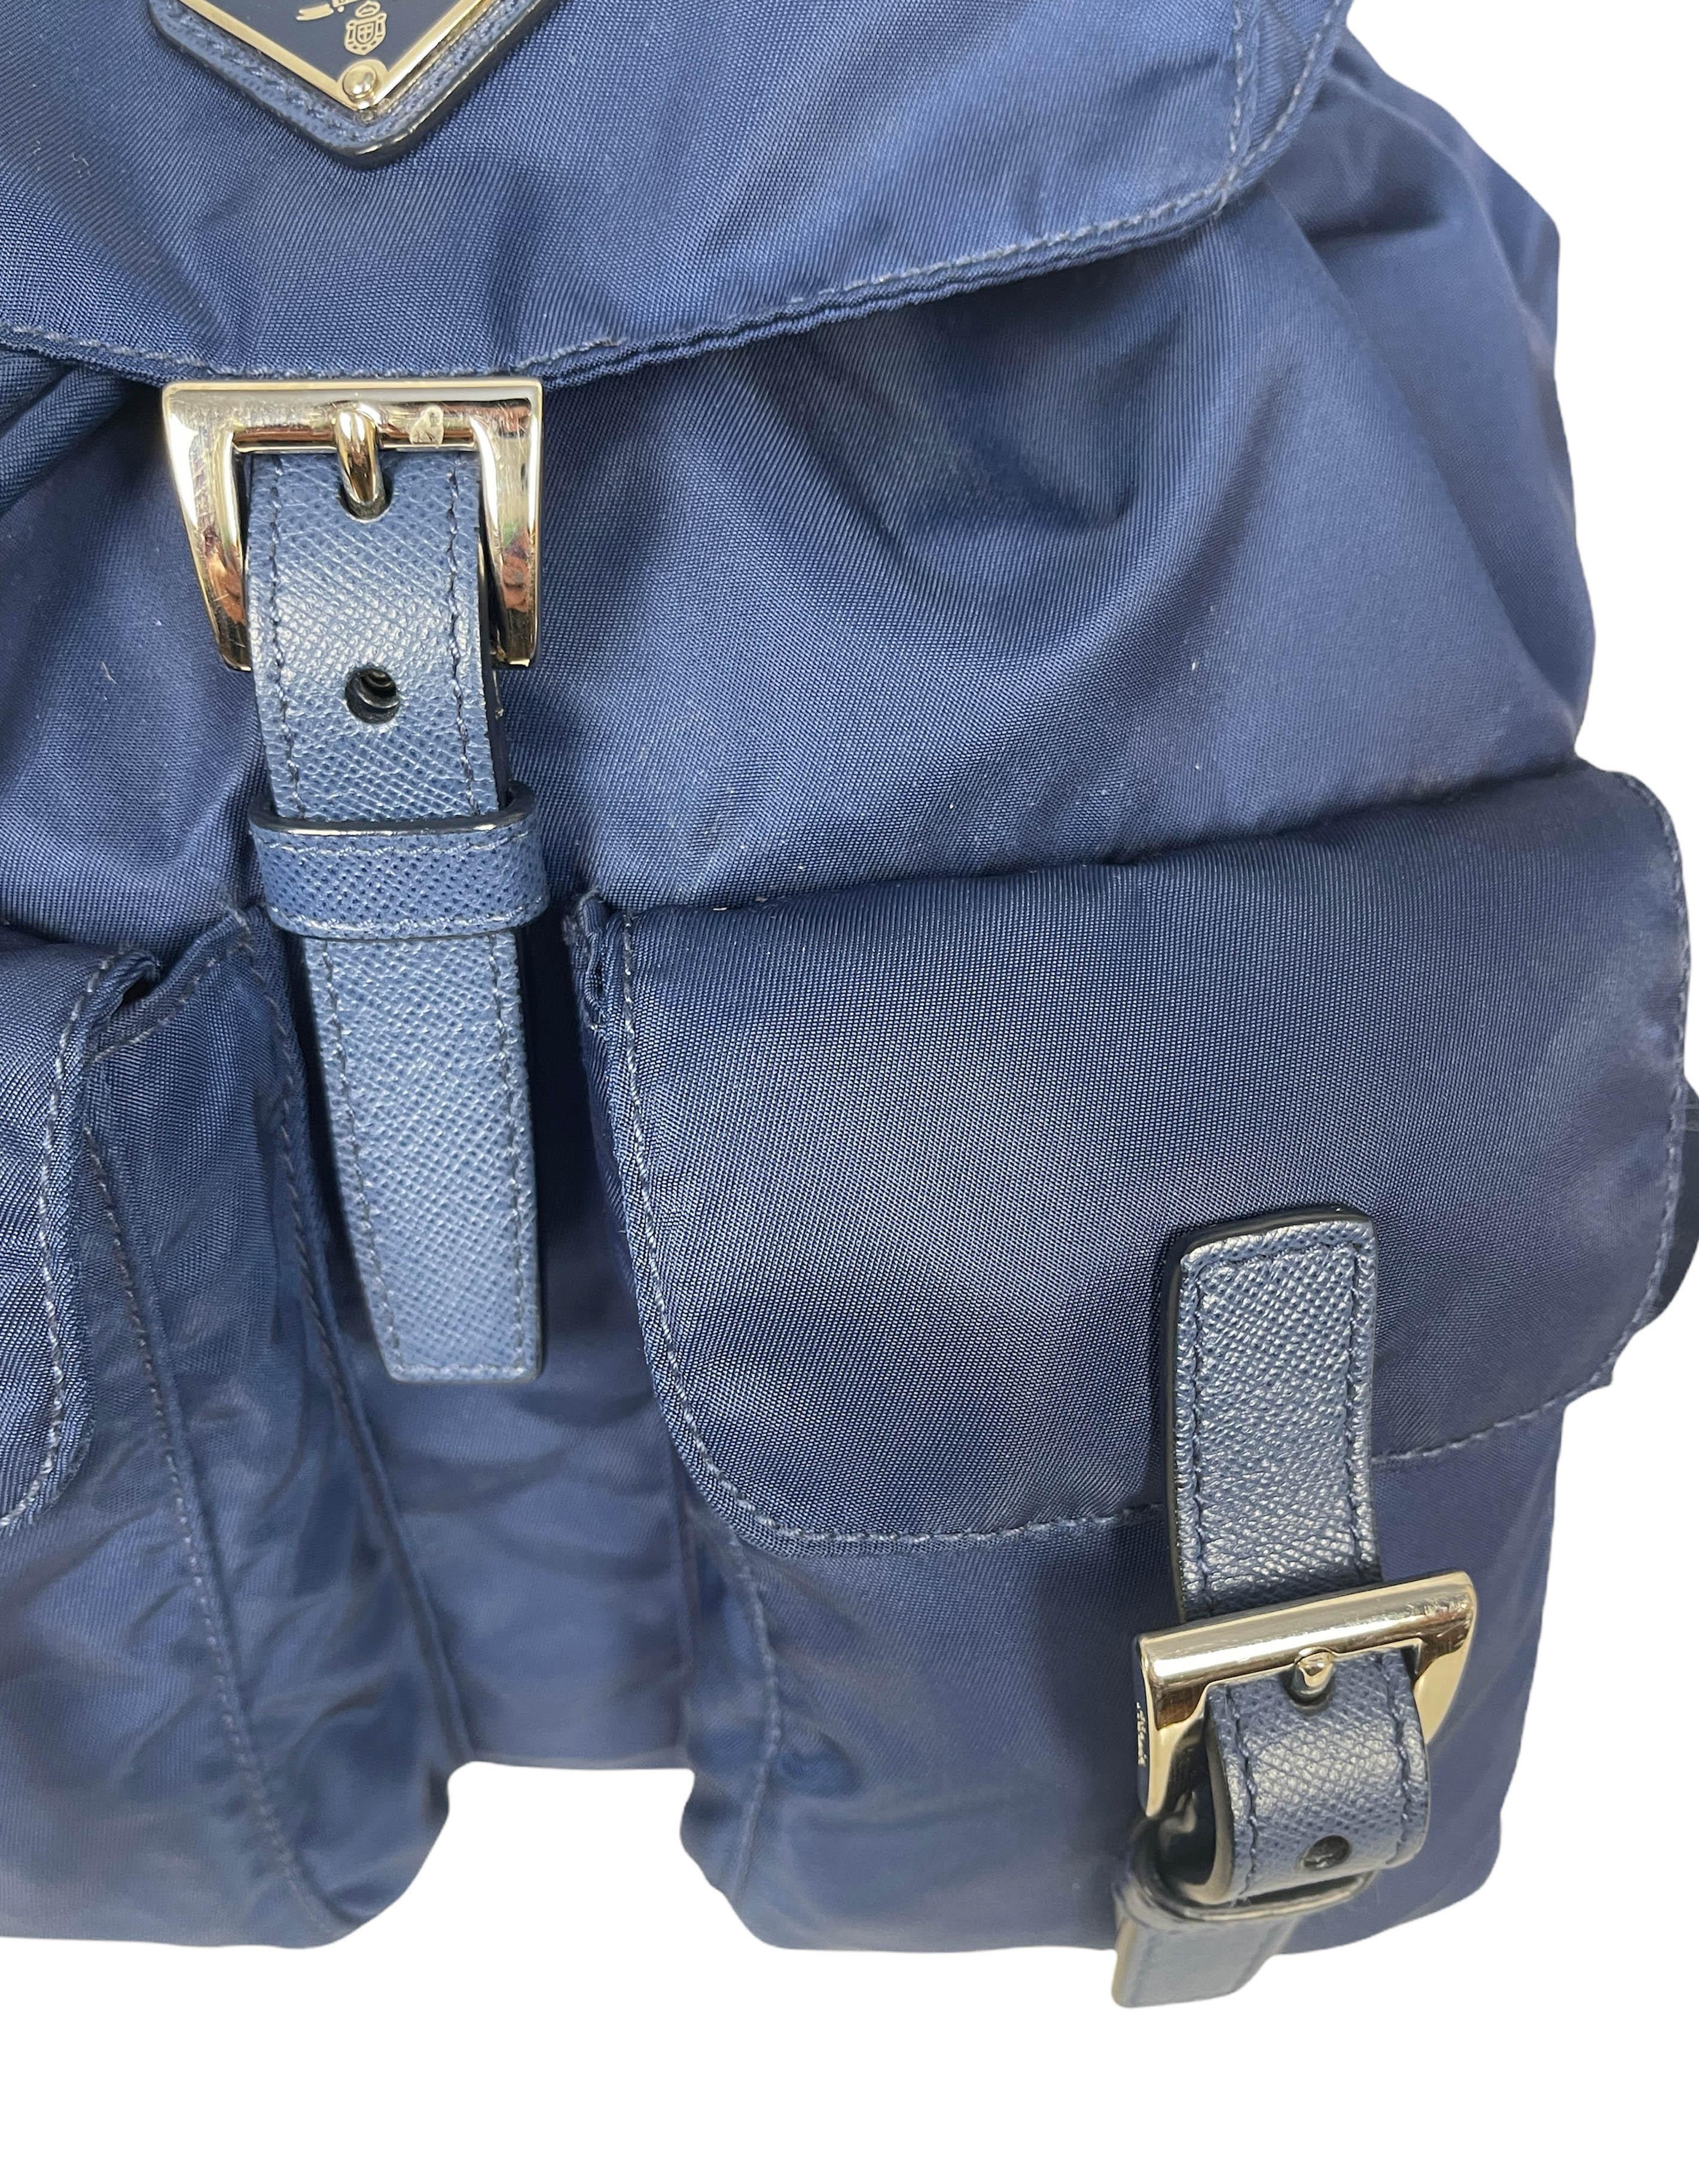 Prada Navy Blue Tessuto Nylon Backpack Bag w/ Front Buckle Pockets 1